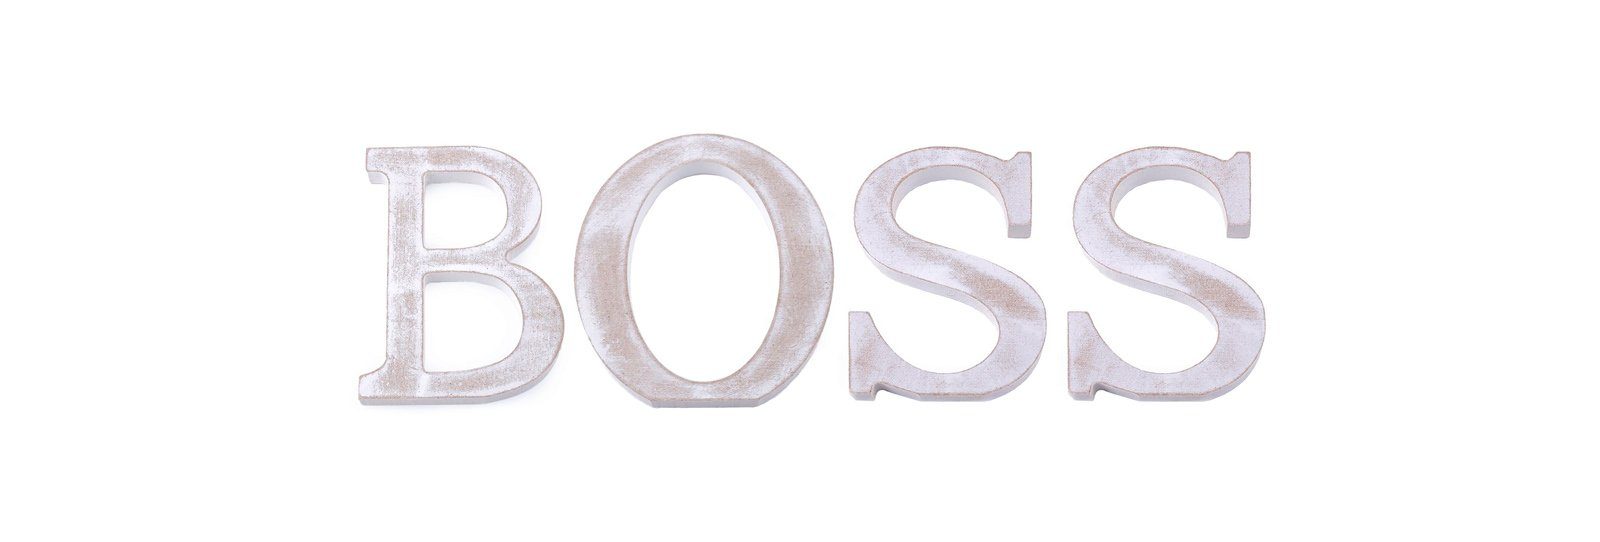 maDDma Deko-Schriftzug 3D Schriftzug 11 cm Höhe, weiß-vintage, Schriftzug: Boss aus Einzelbuchstaben